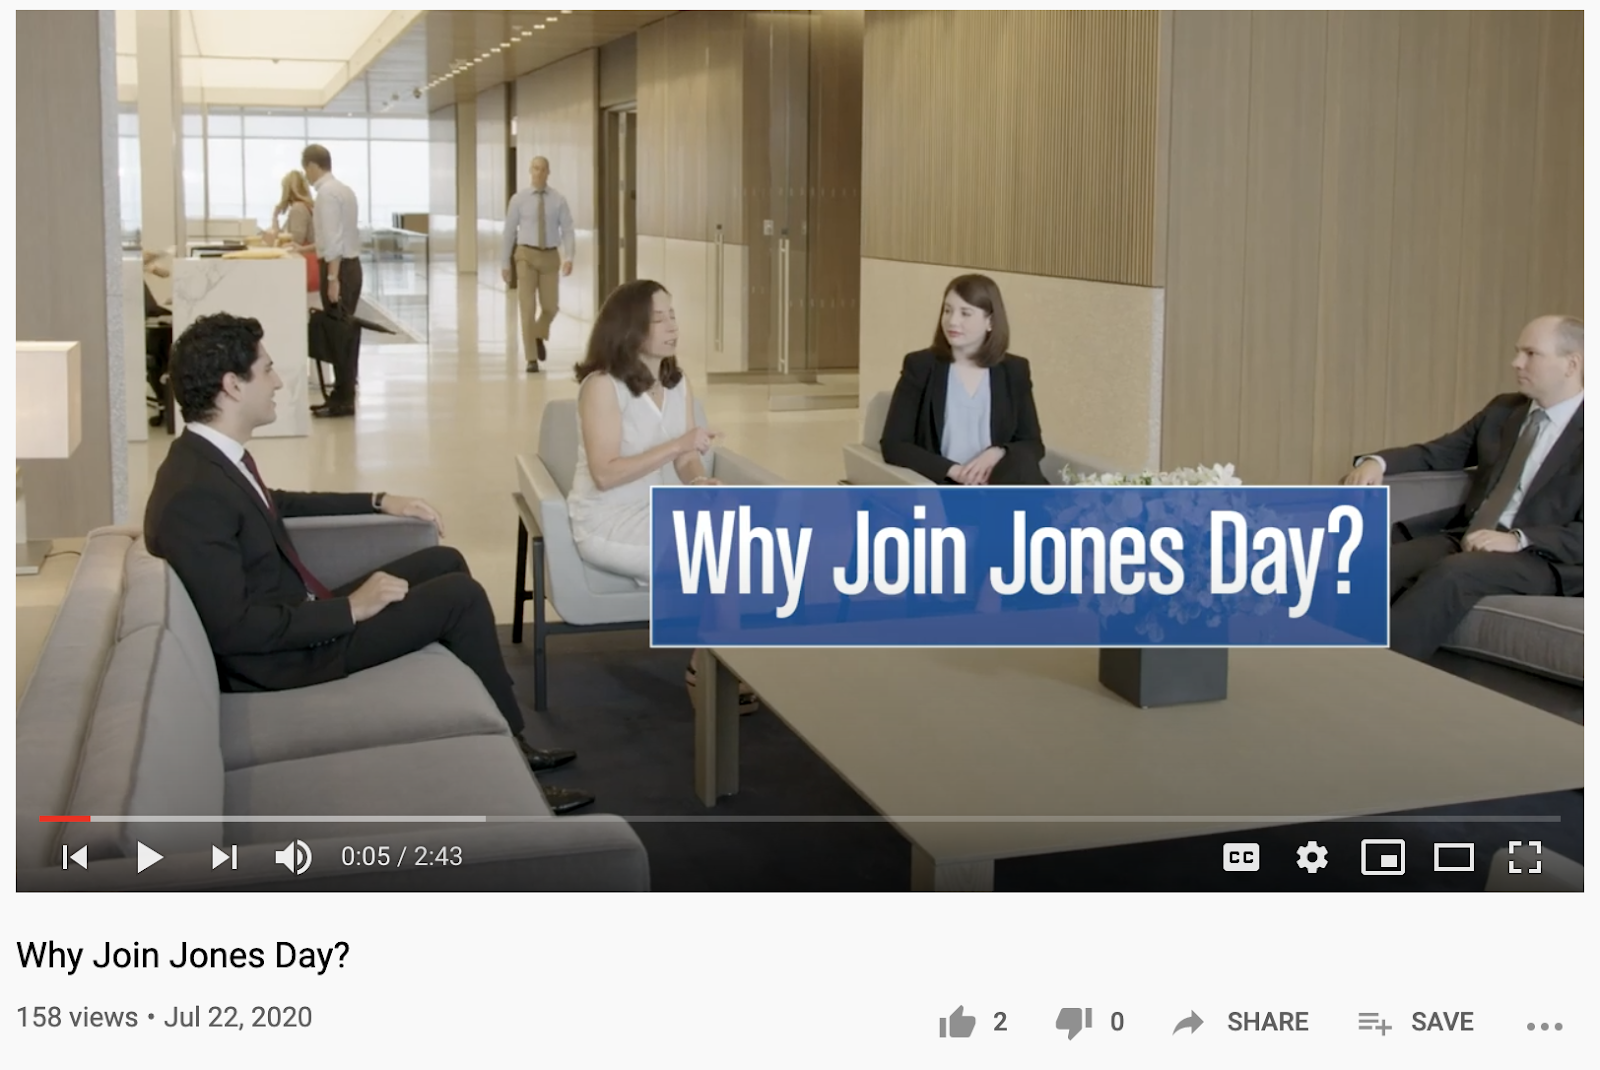 Recruitment Videos on YouTube: Jones Day